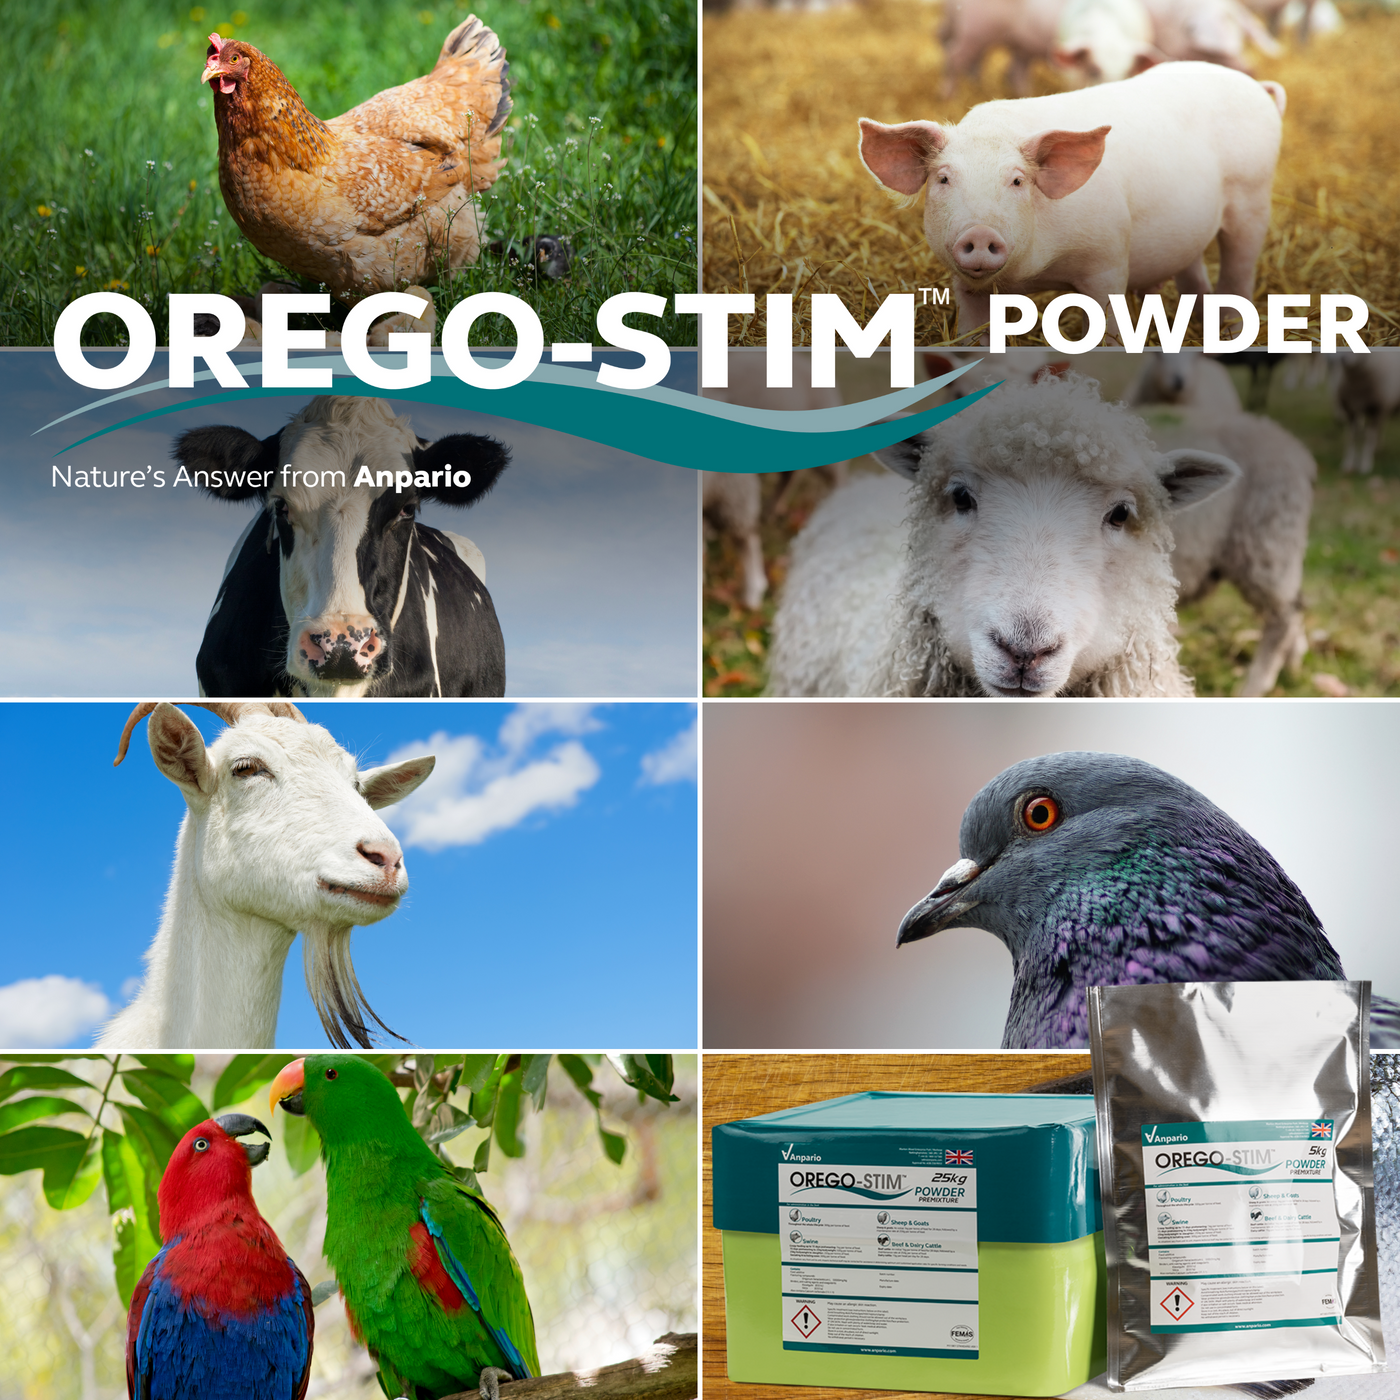 Orego-Stim Powder